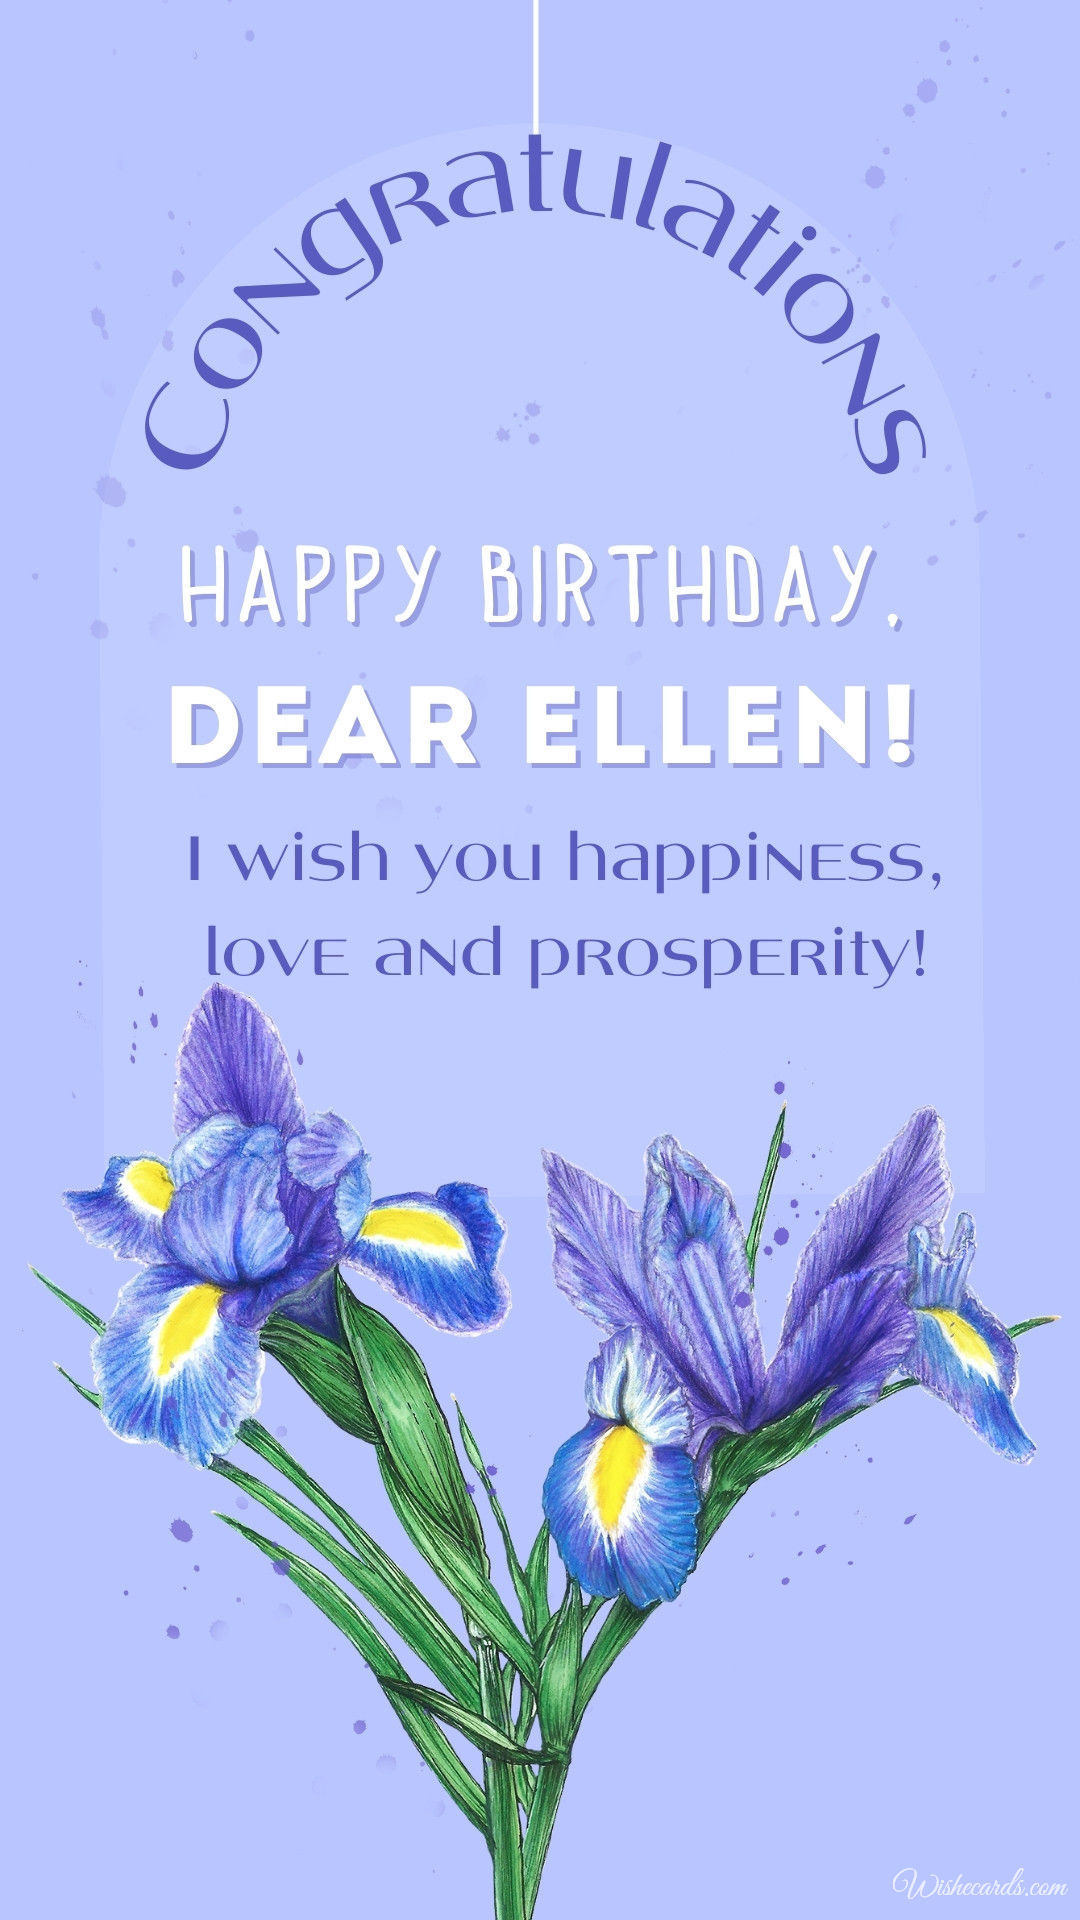 Happy Birthday to Ellen